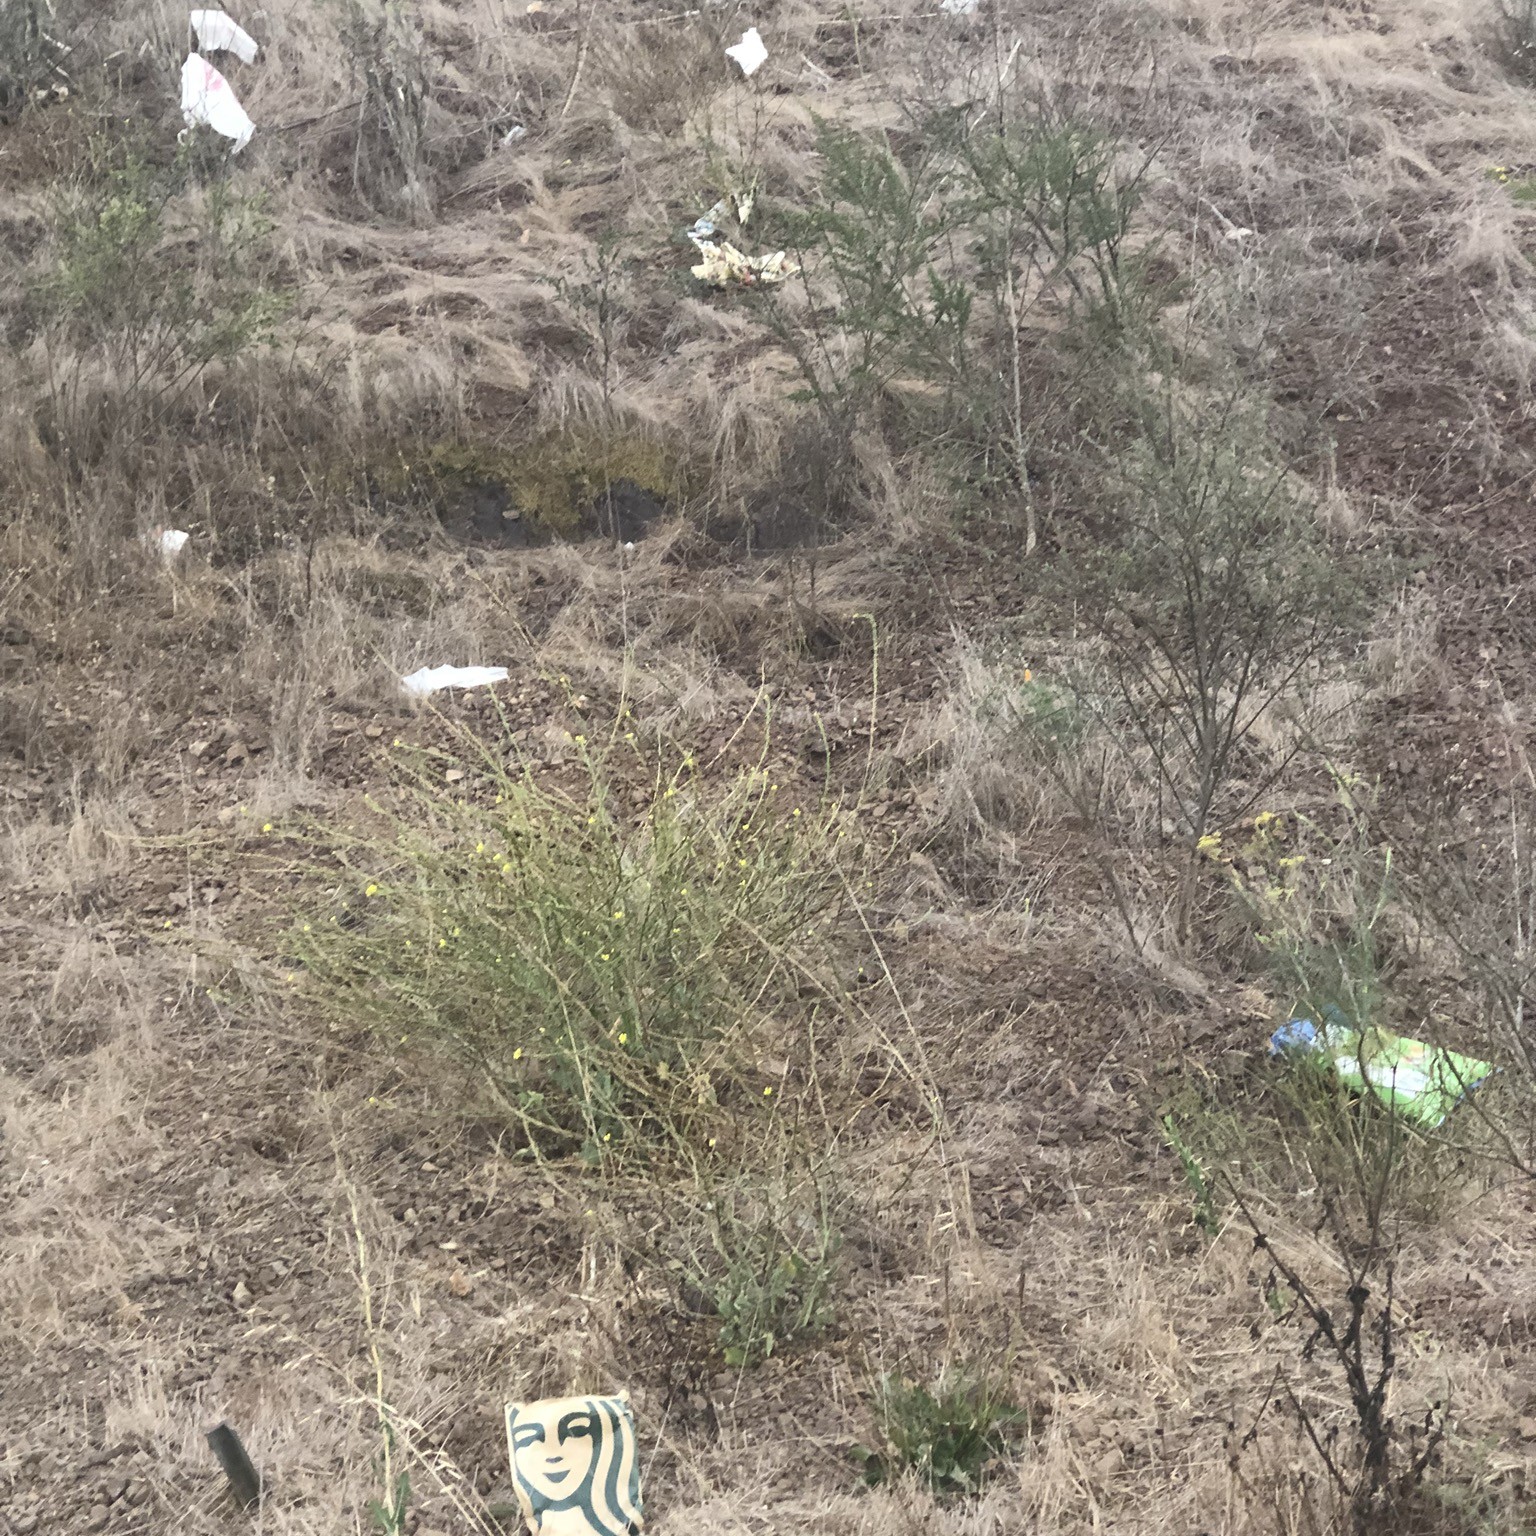 Pieces of trash littering a hillside.